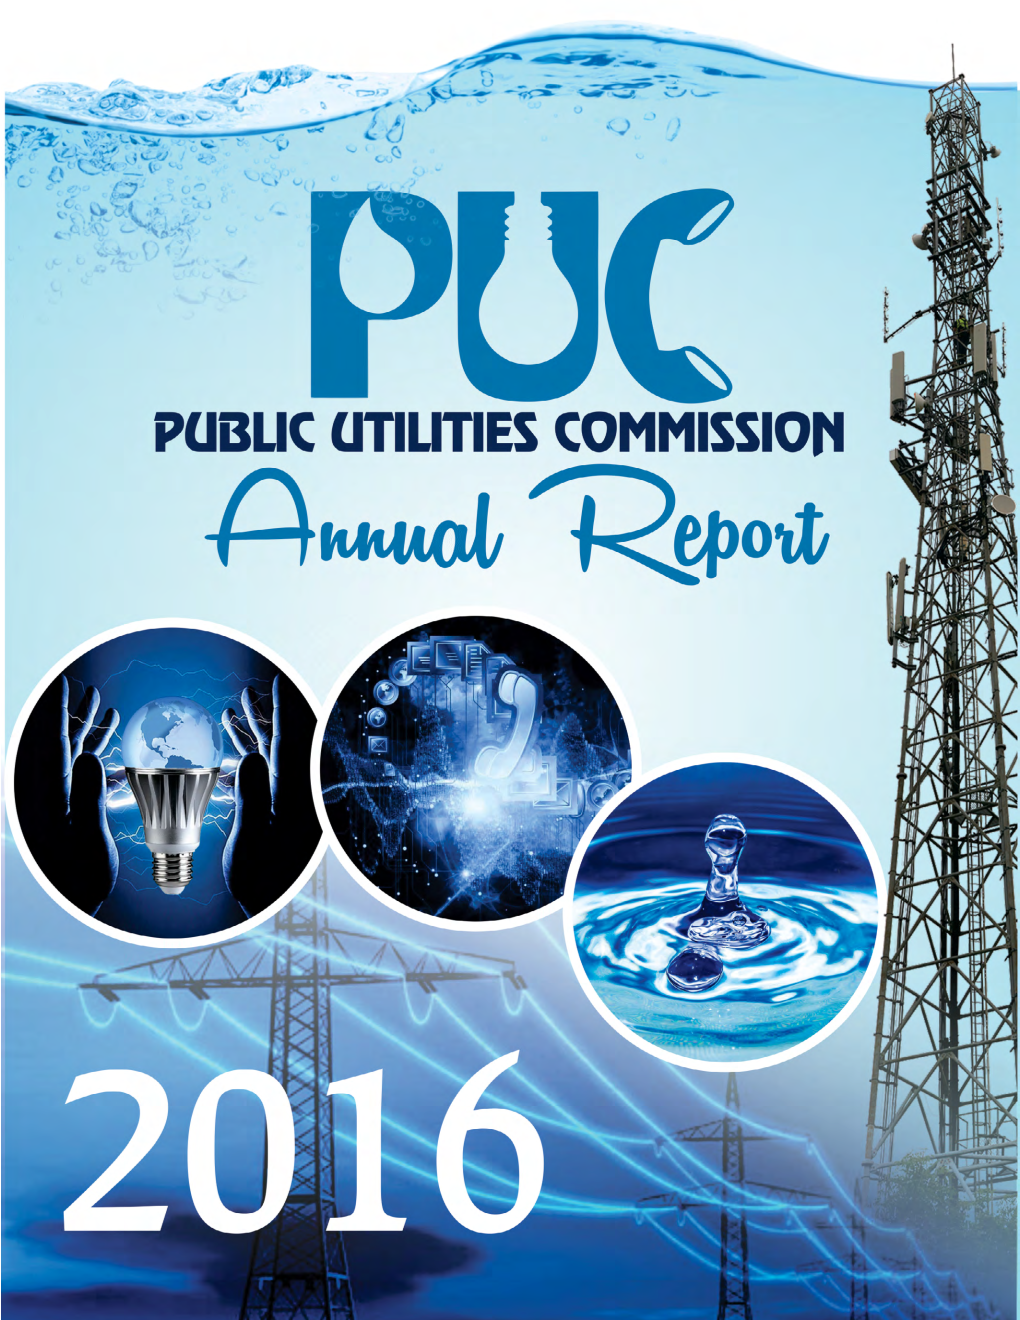 Public Utilities Commission Annual Report - 2016 1 CONTENTS